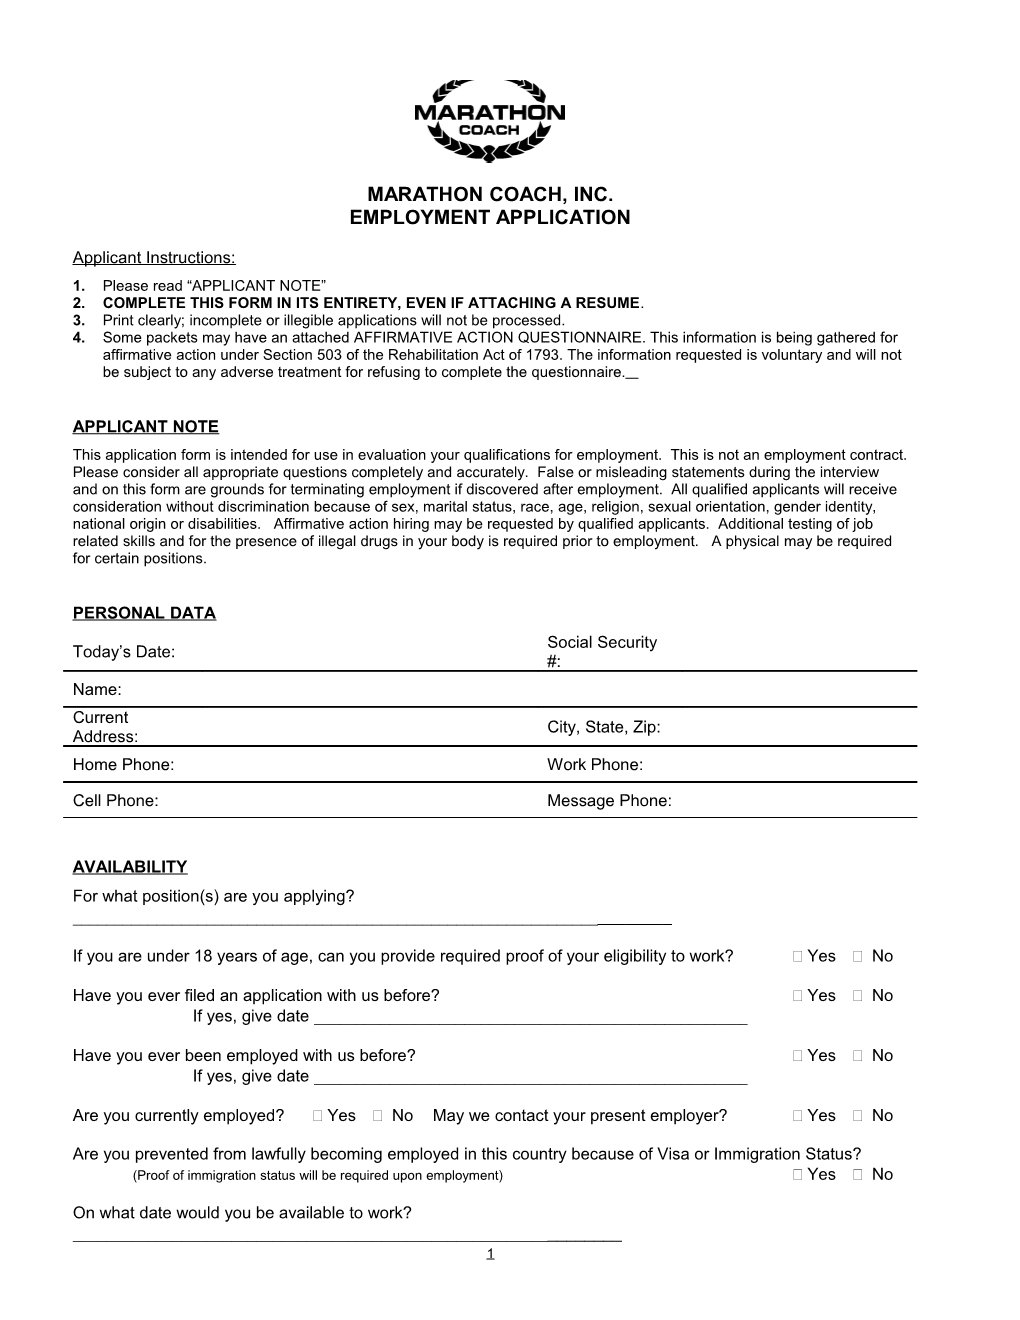 Marathon Coach, Inc., Employment Application